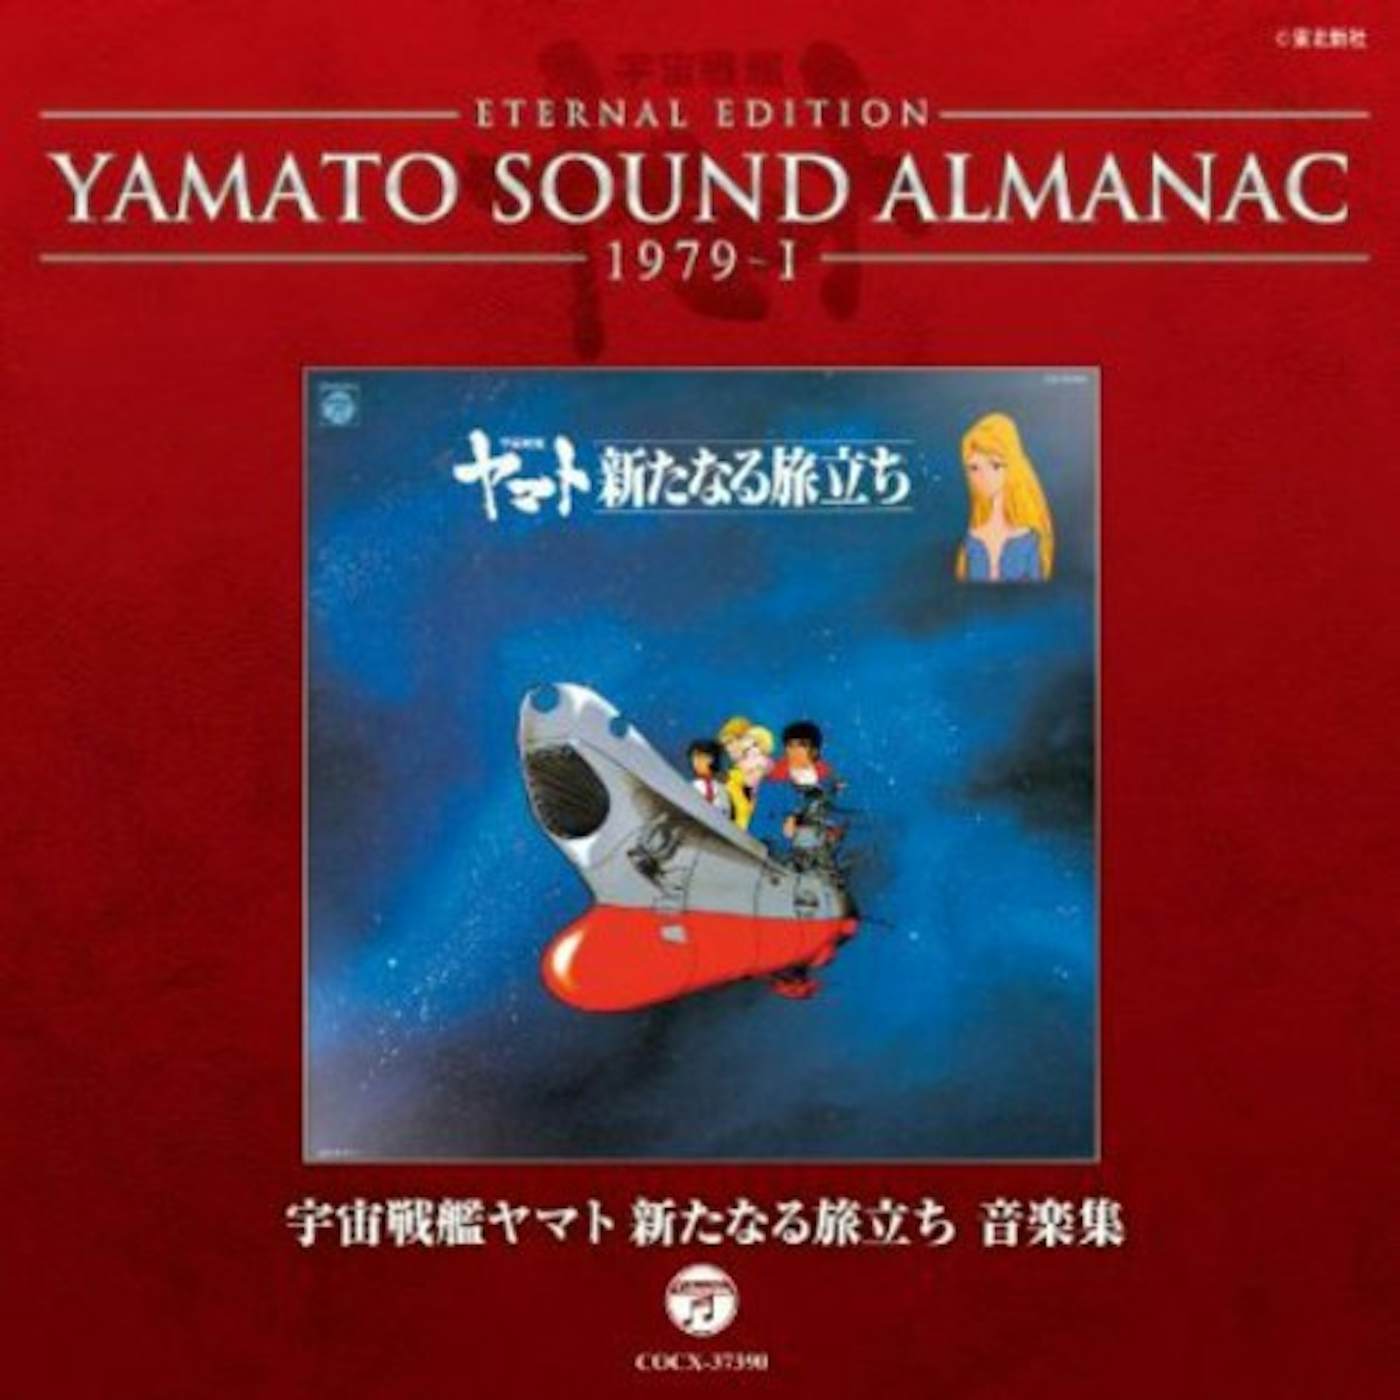 Animation ETERNAL EDITION YAMATO SOUND ALMANAC 1979-1 UCHUU CD